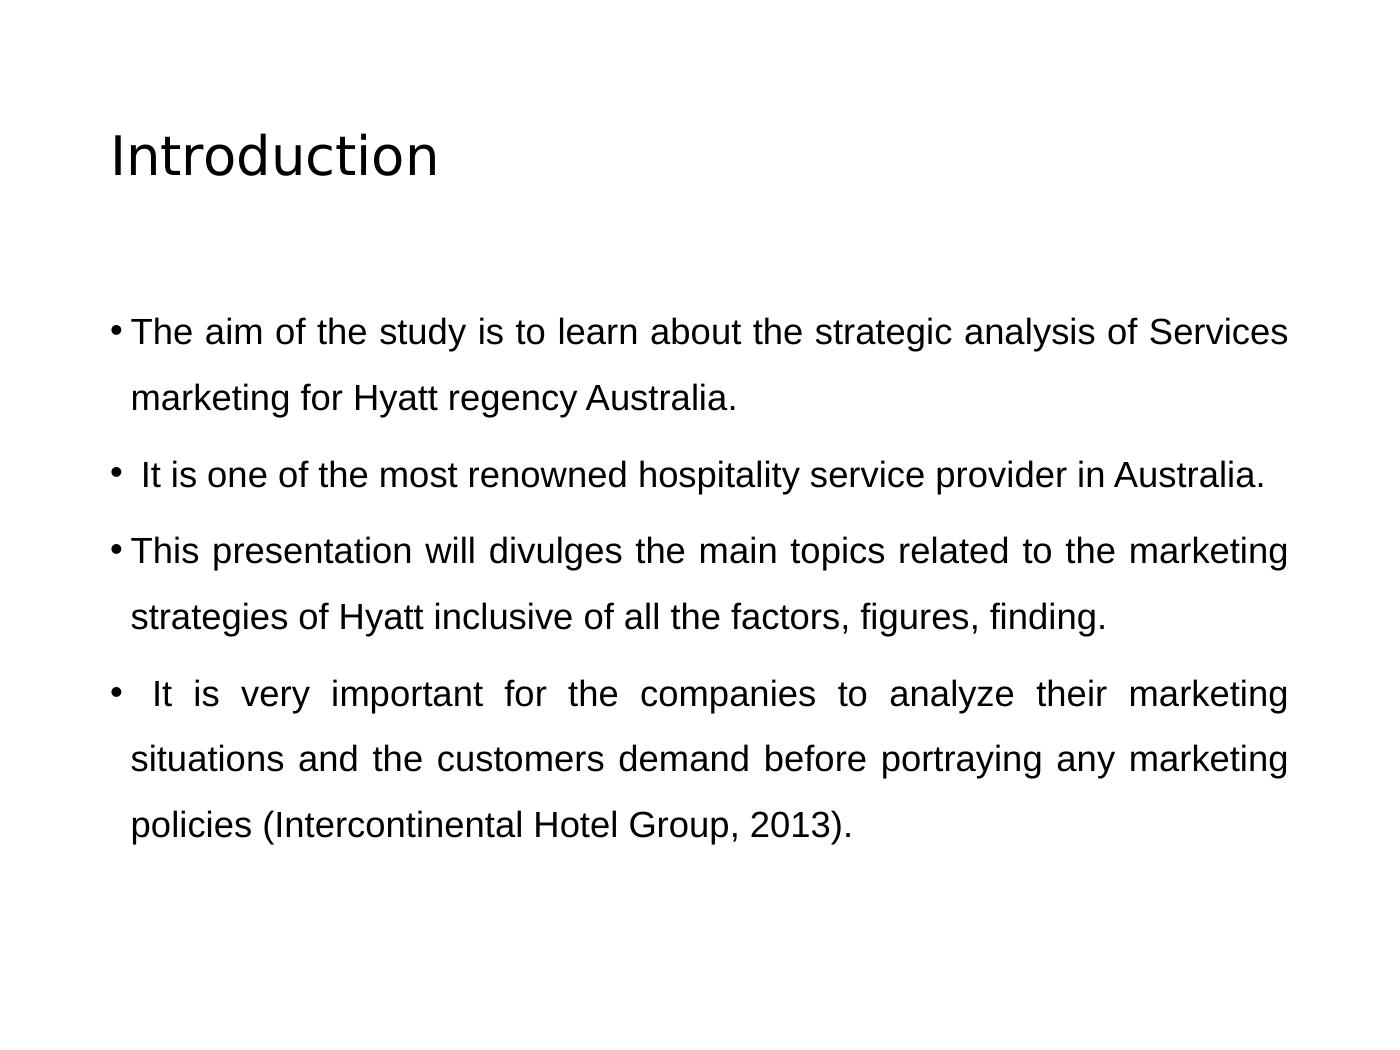 Strategic Analysis of Services Marketing for Hyatt Regency Australia_2